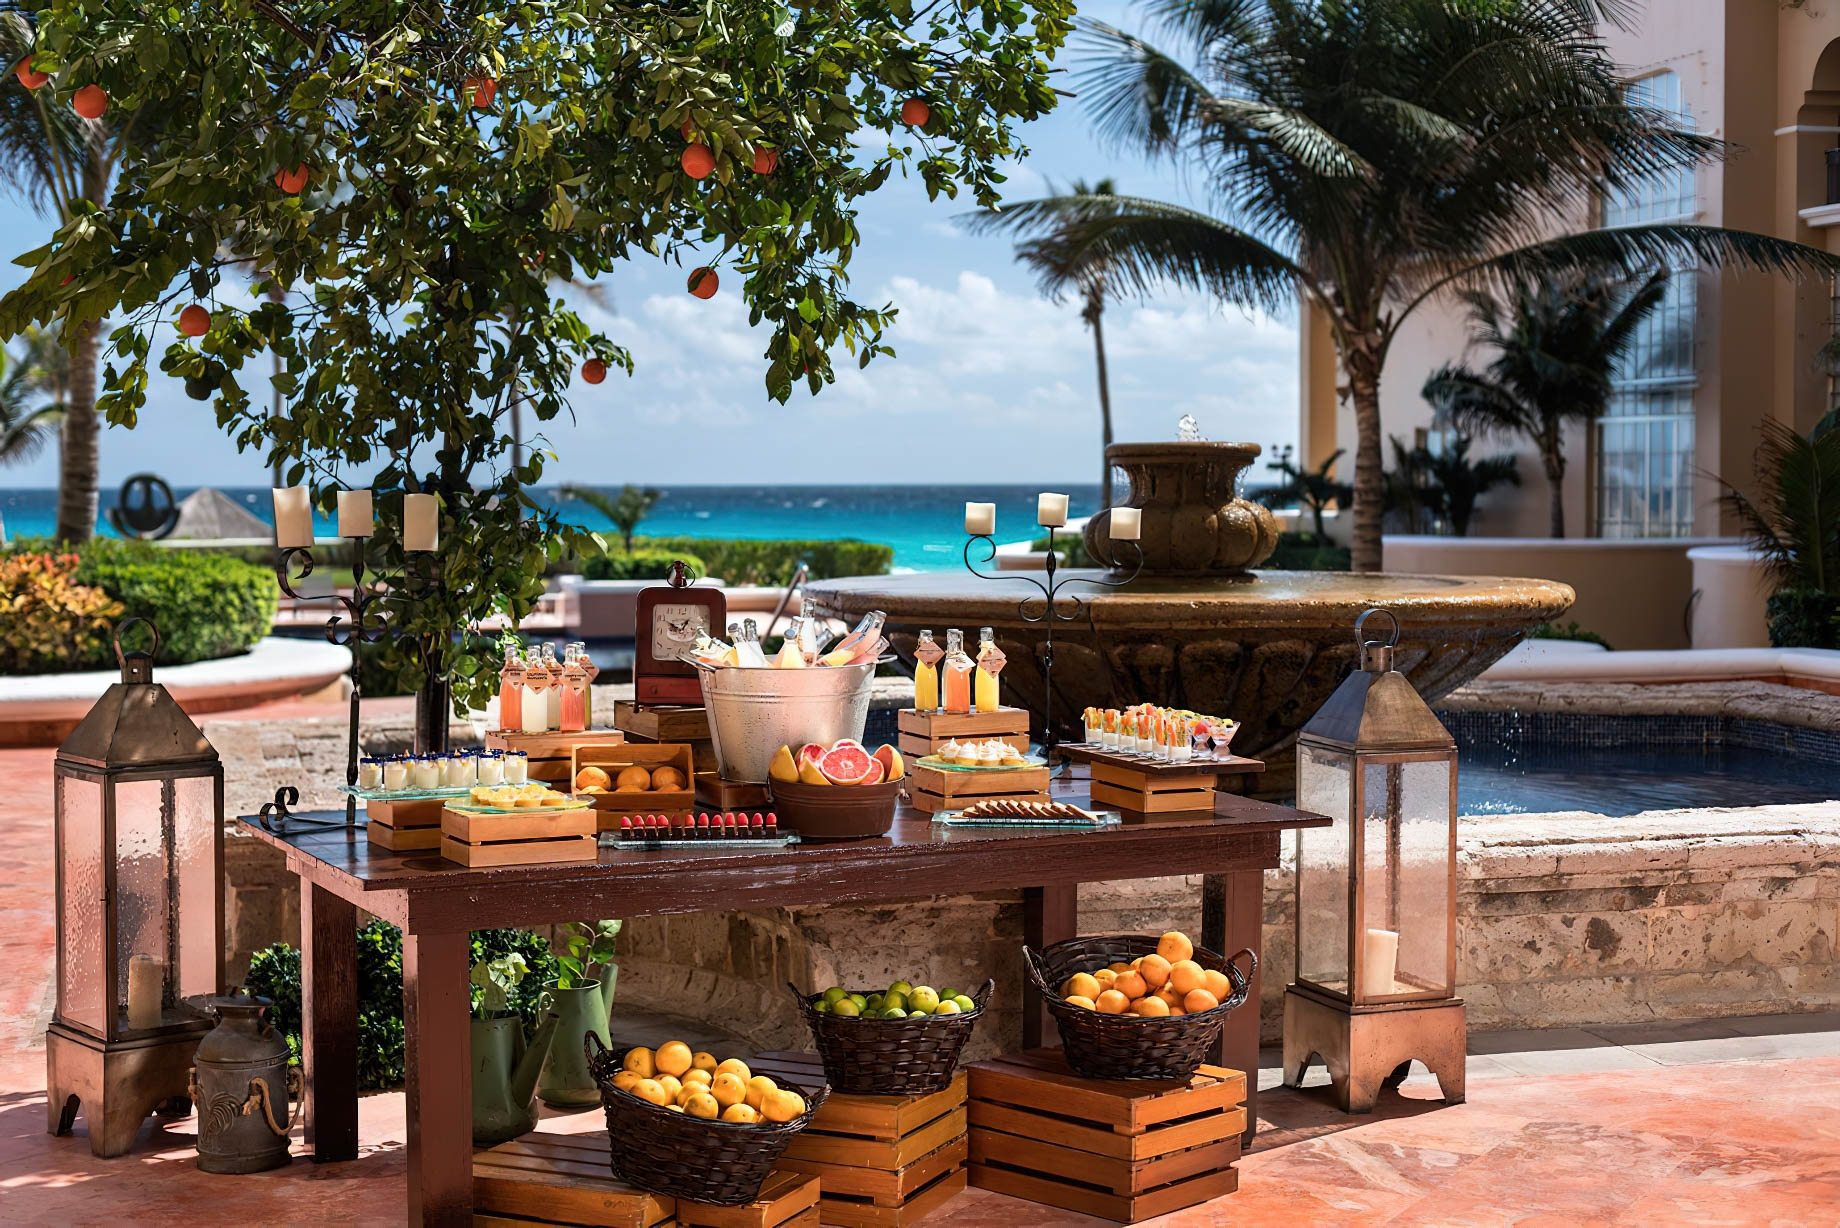 The Ritz-Carlton, Cancun Resort - Cancun, Mexico - Poolside Food Station